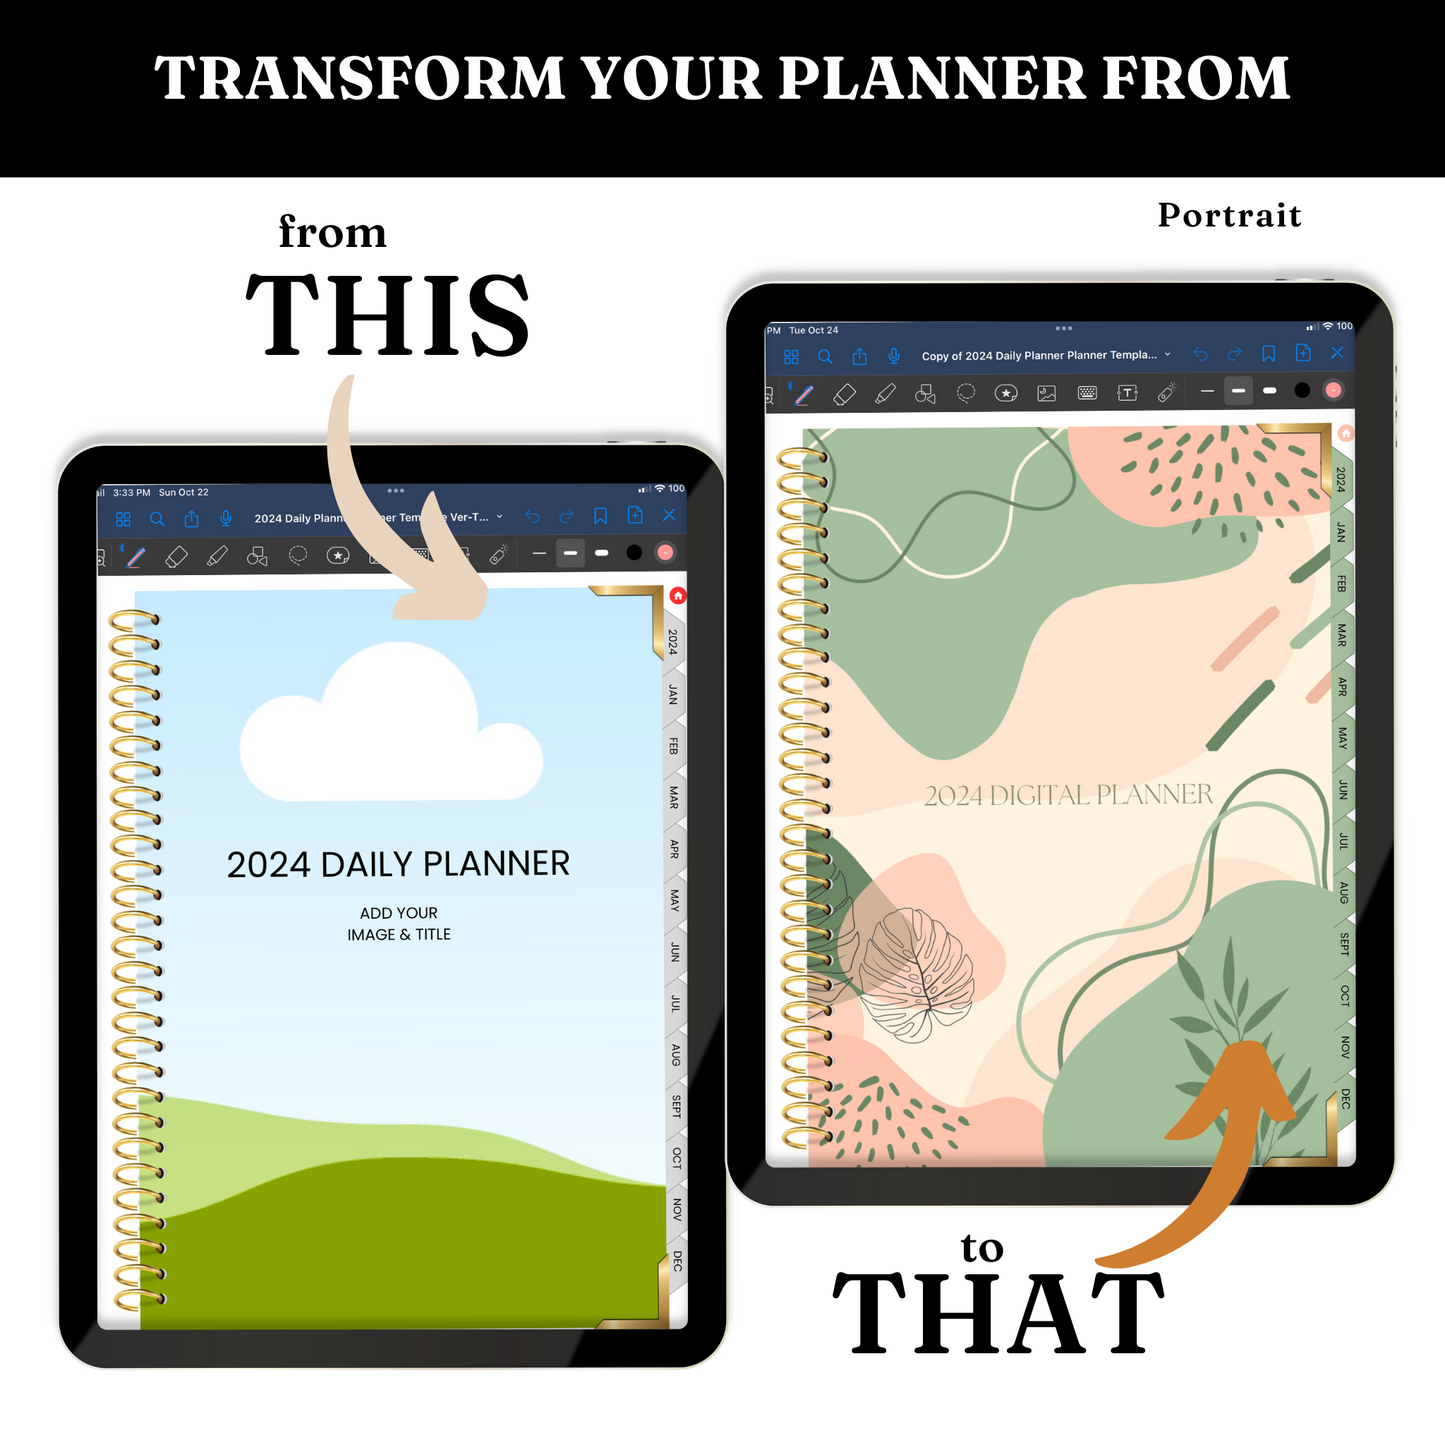 2024 Digital Planner Template - PLR